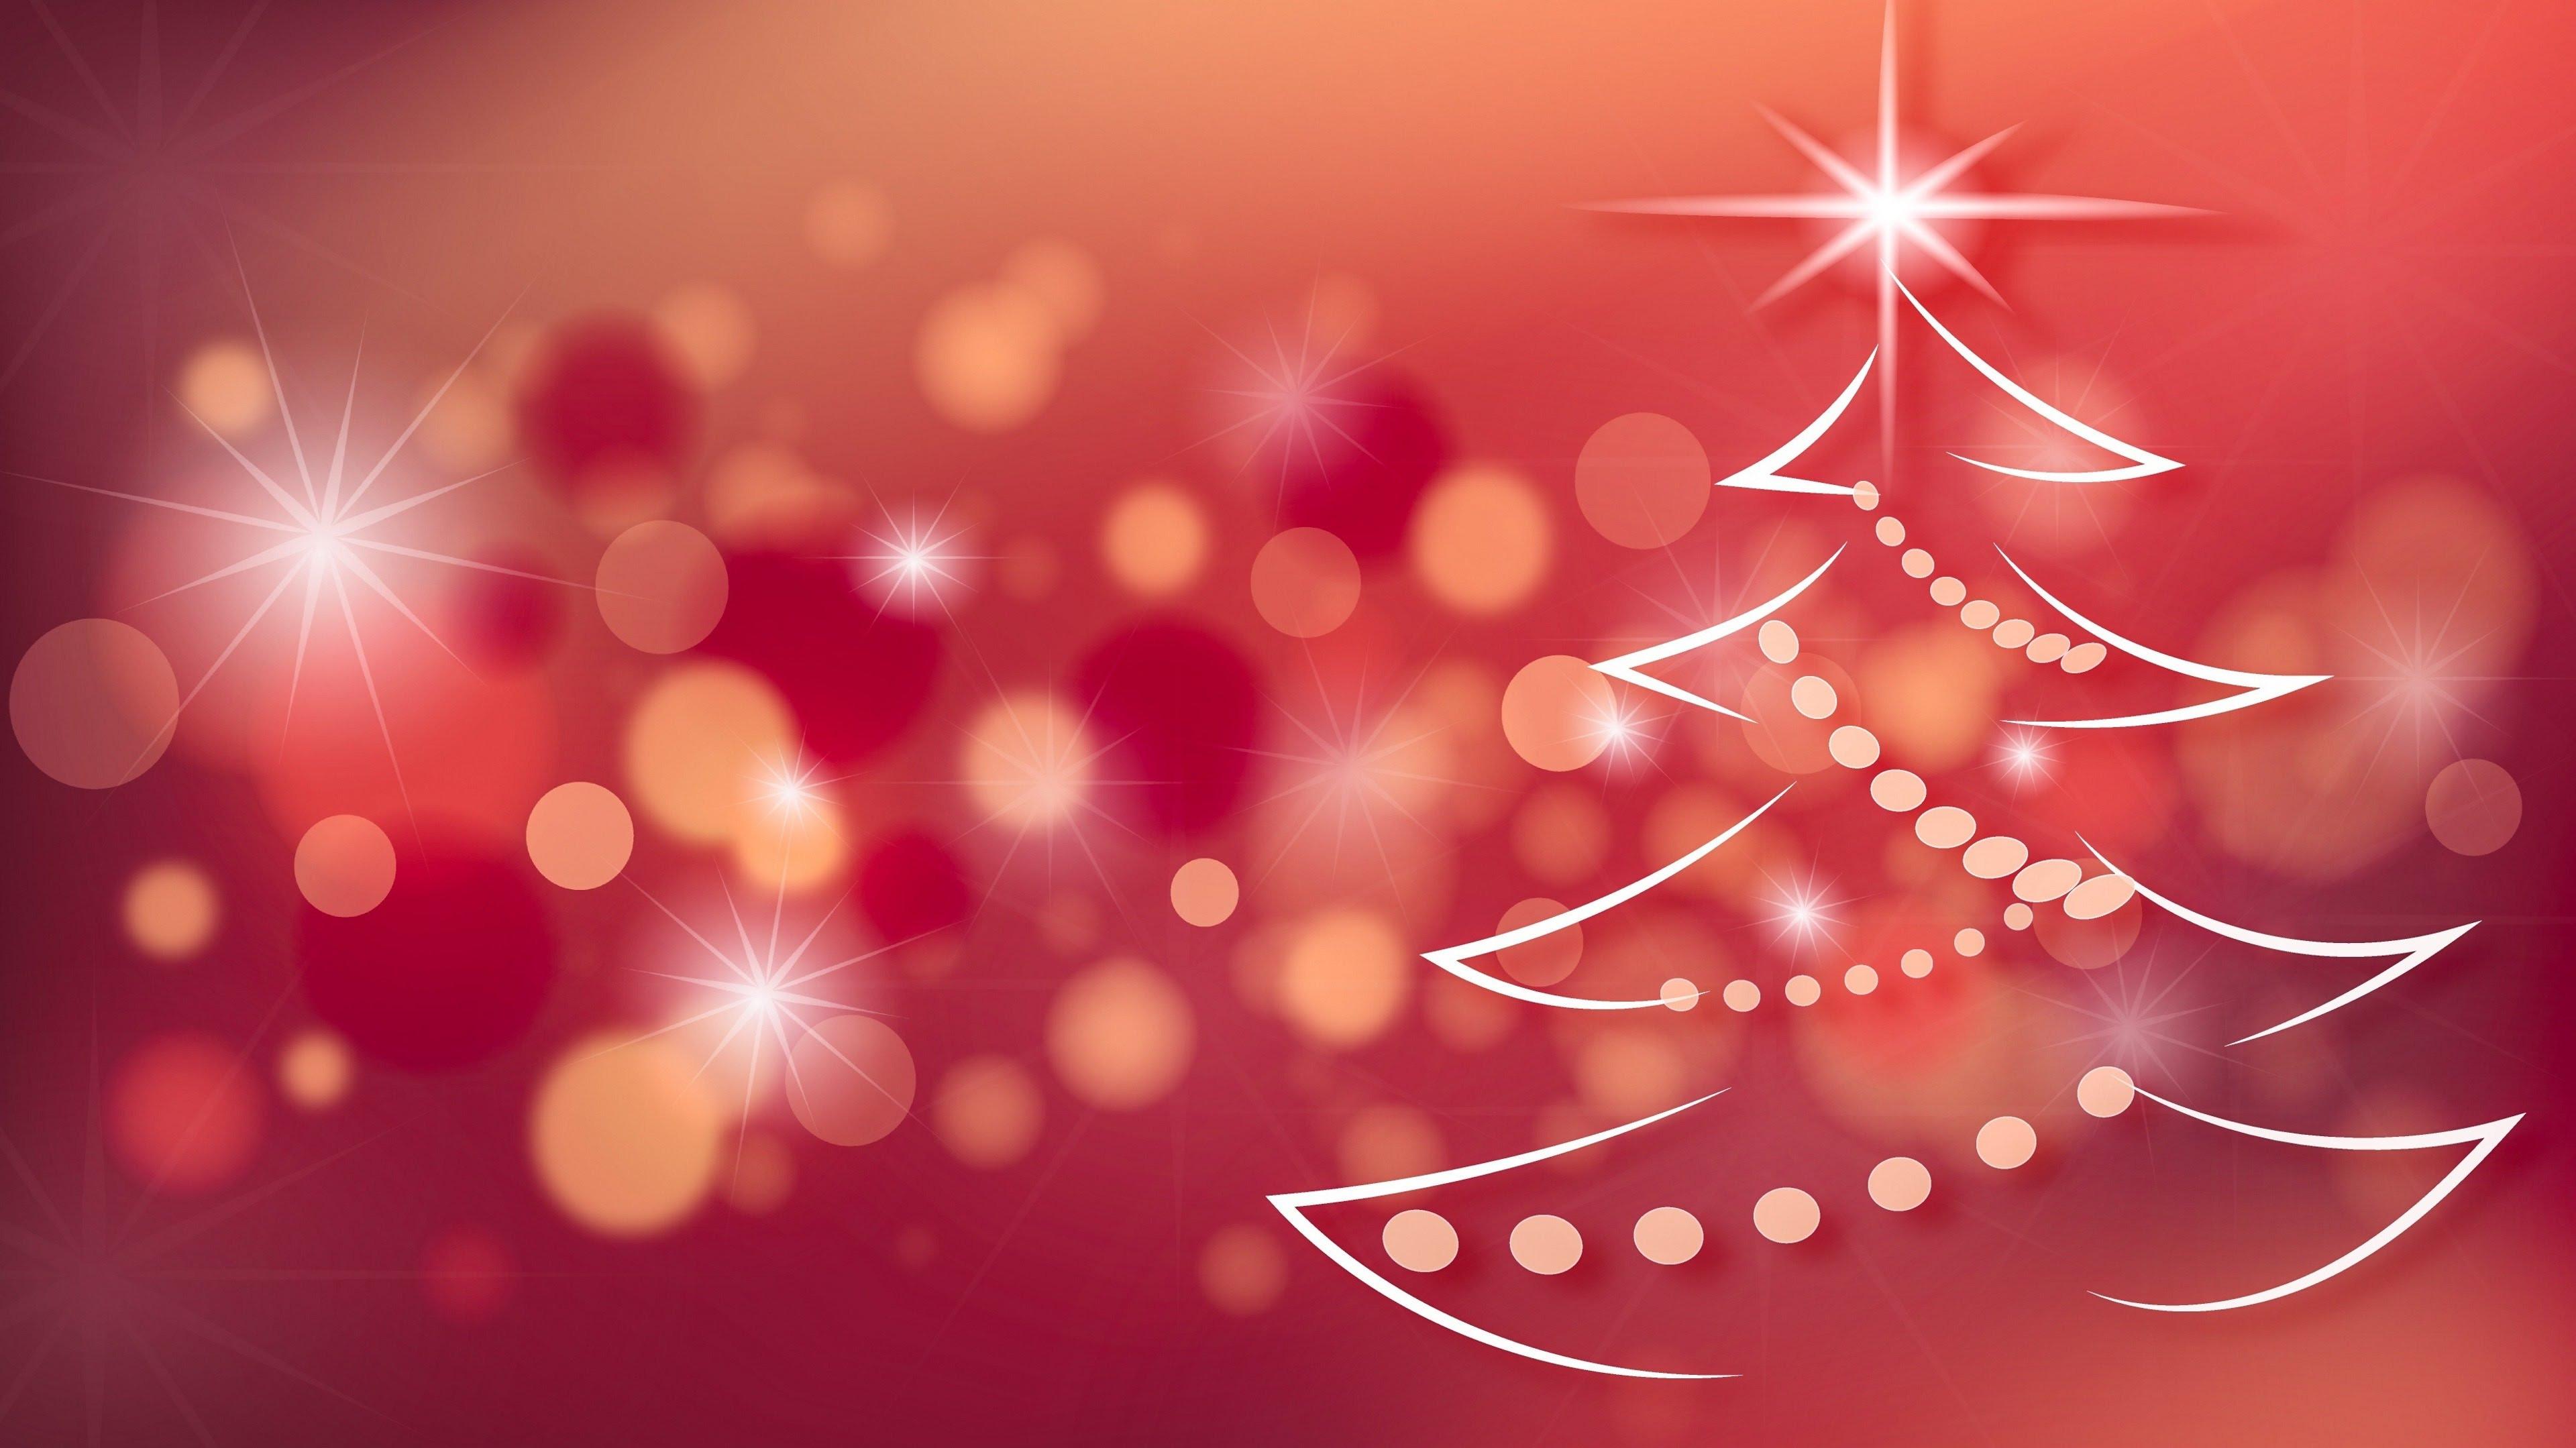 Download wallpaper Christmas tree 3840x2160